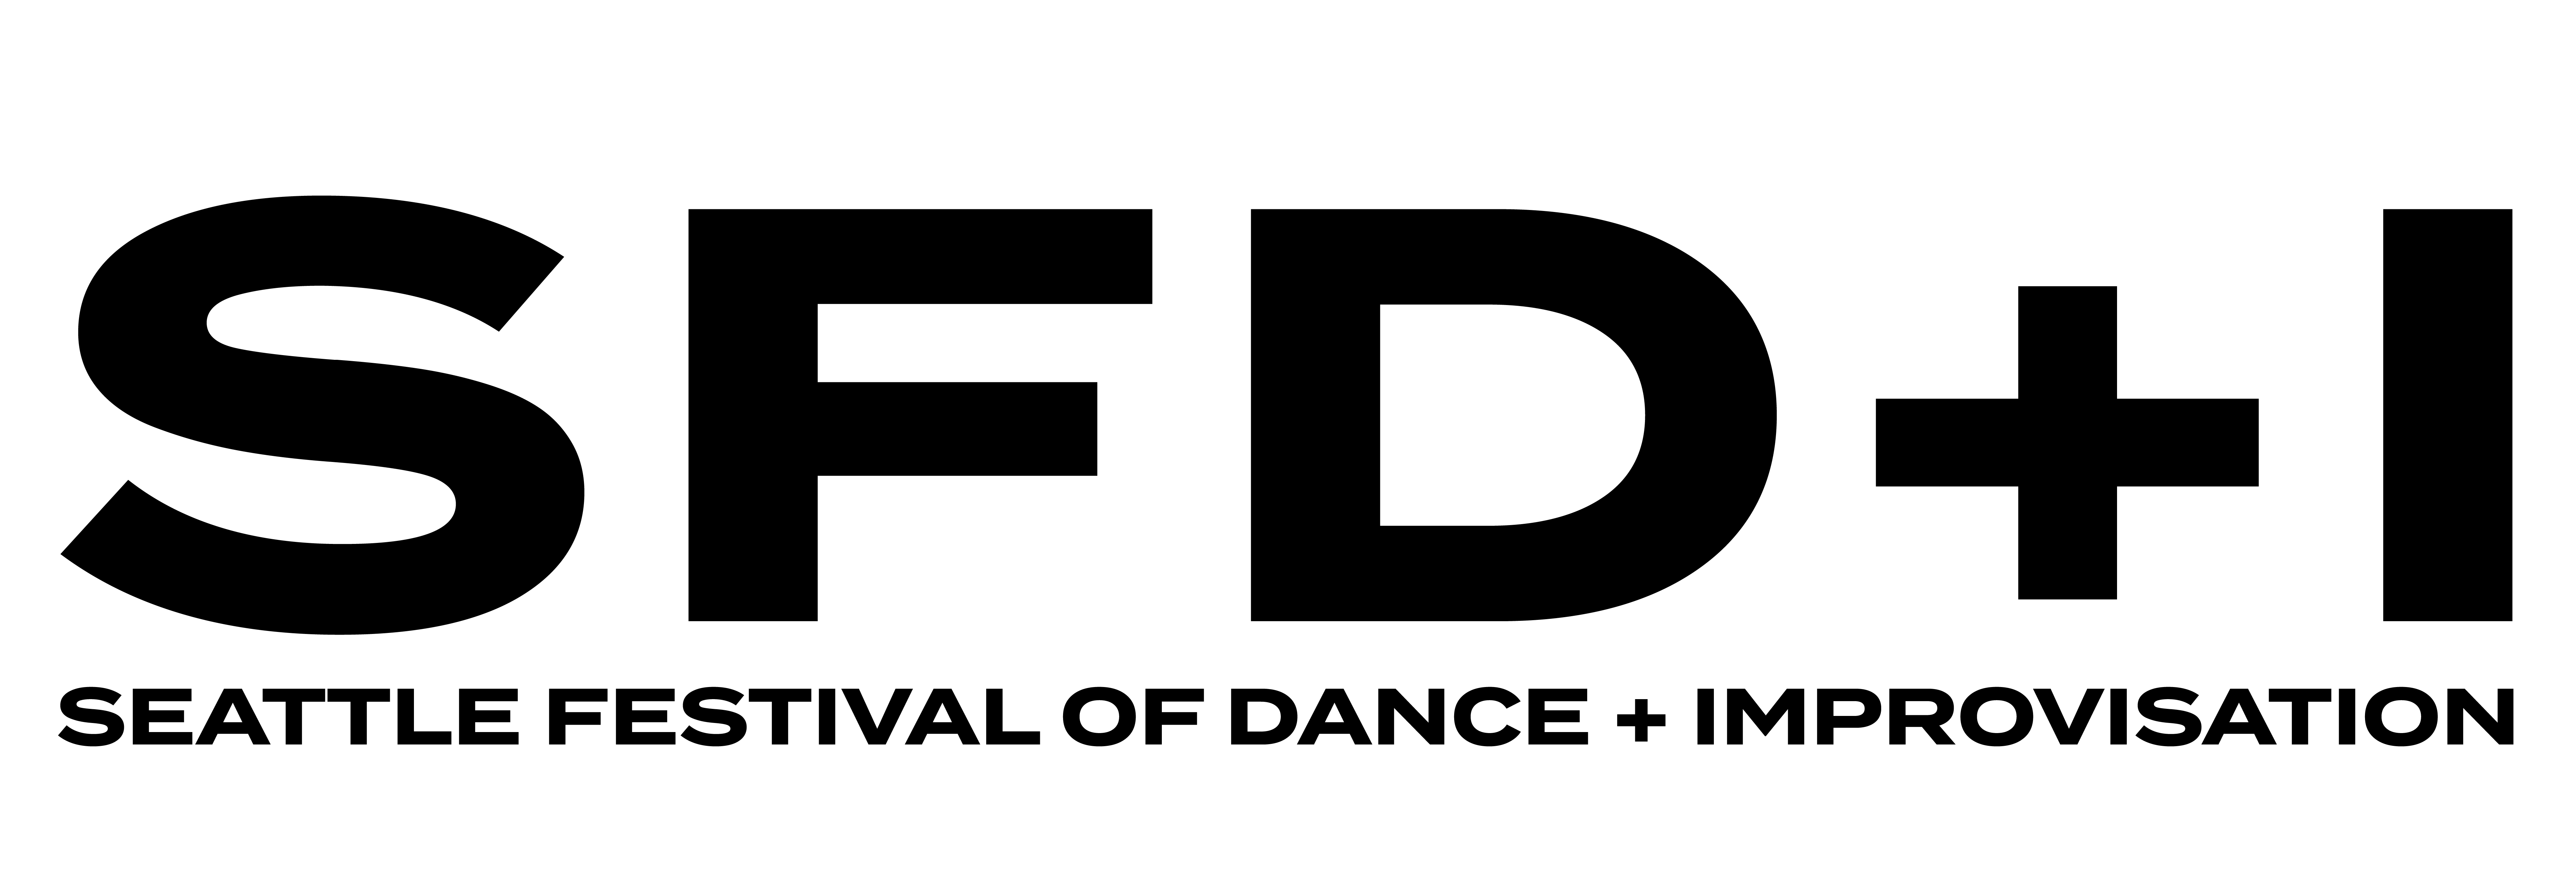 Seattle Festival of Dance + Improvisation